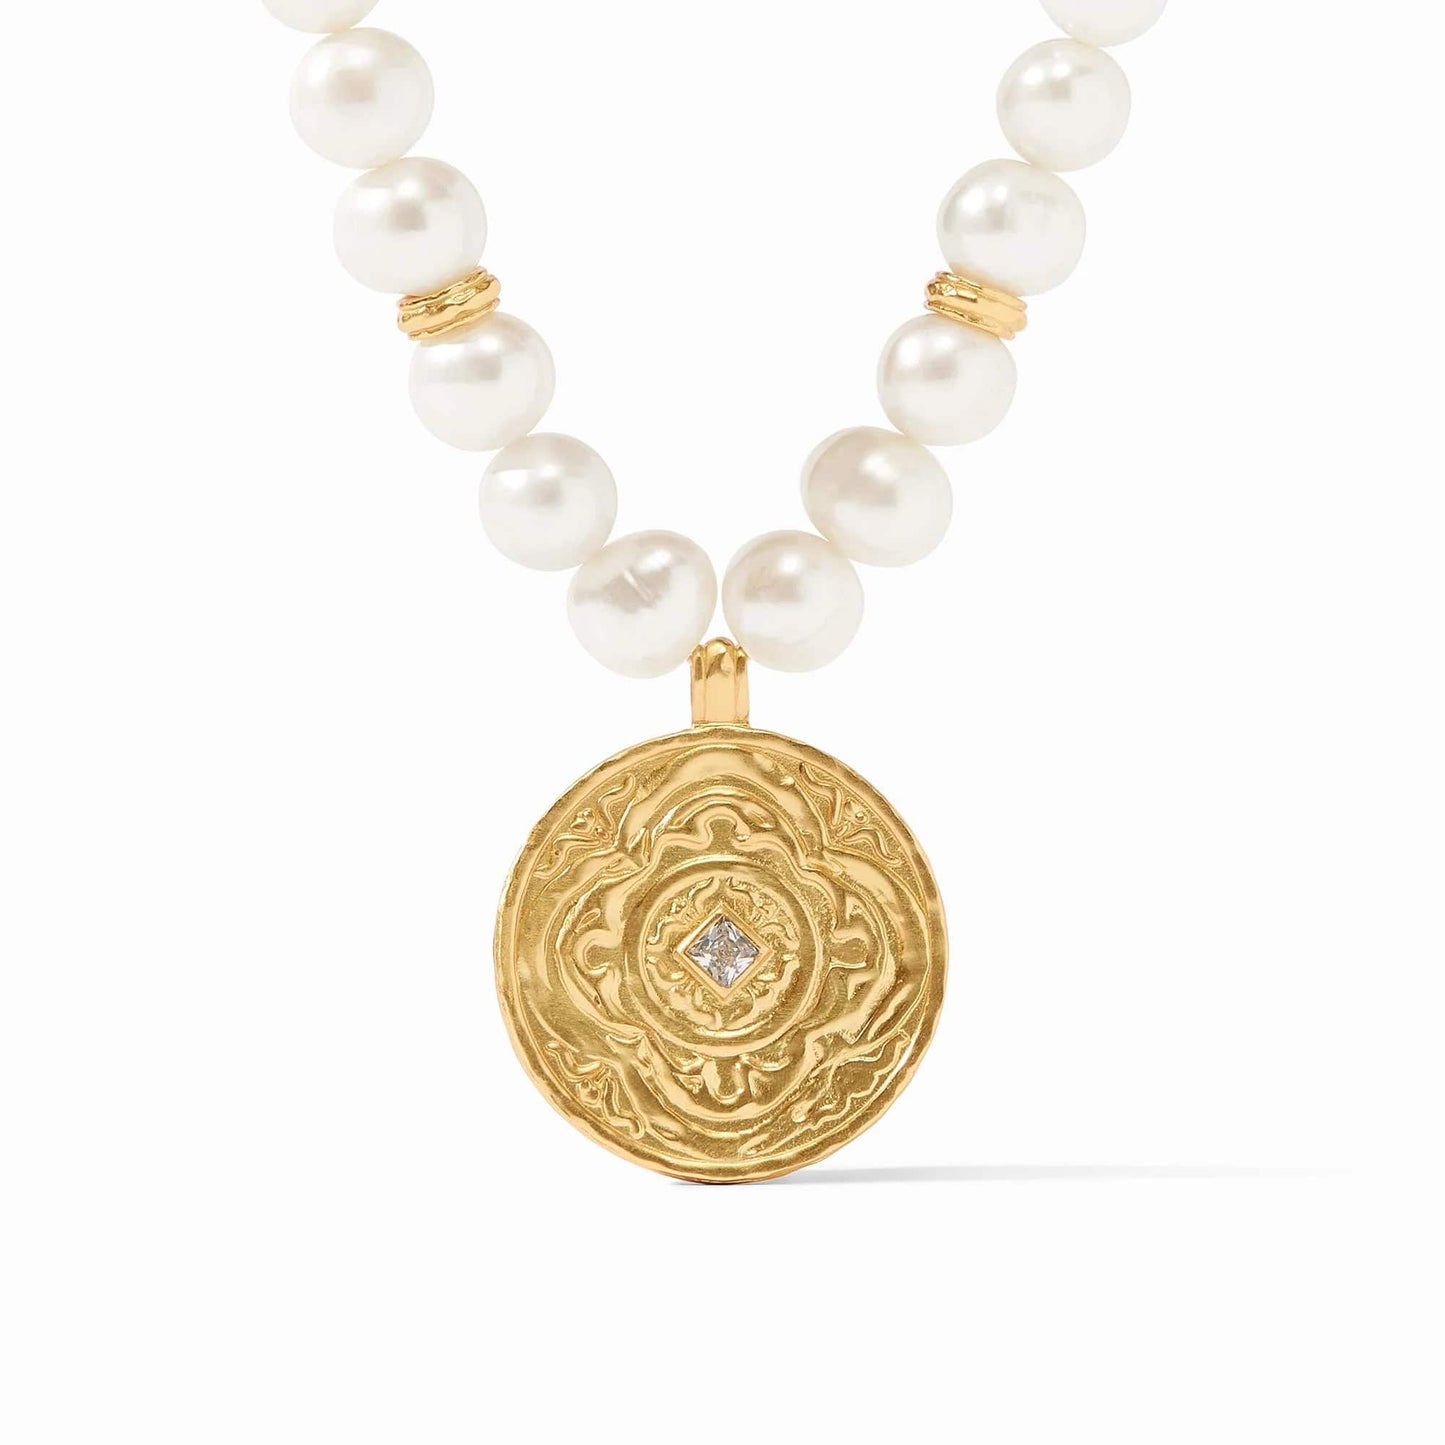 JULIE VOS - Astor Statement Necklace - Iridescent Clear Crystal - Findlay Rowe Designs